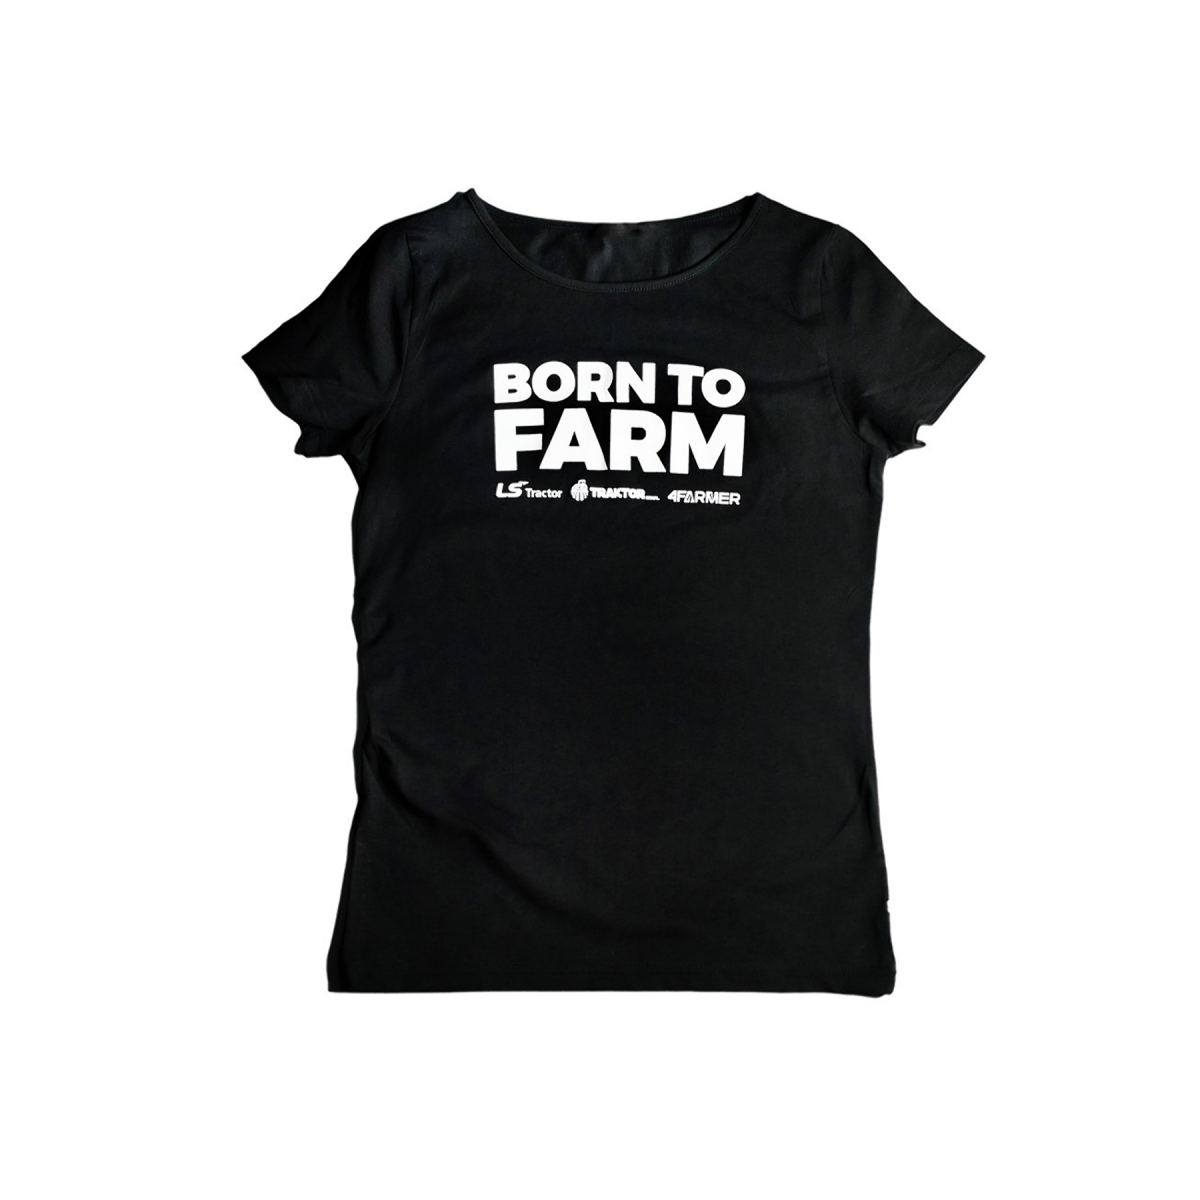 "BORN TO FARM" T-shirt for women